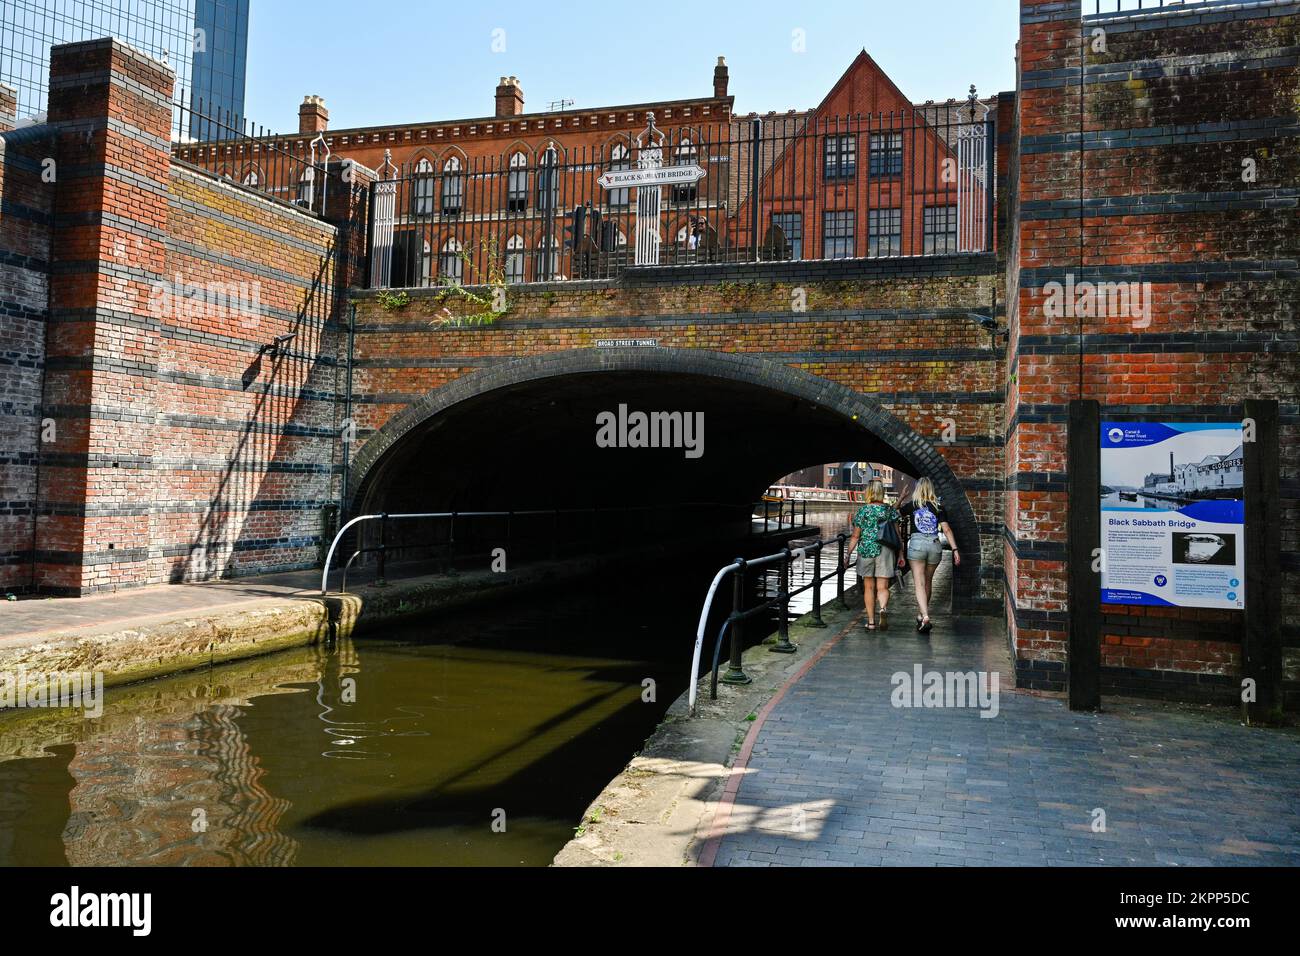 Black Sabbath Bridge on the Birmingham City Waterways Stock Photo